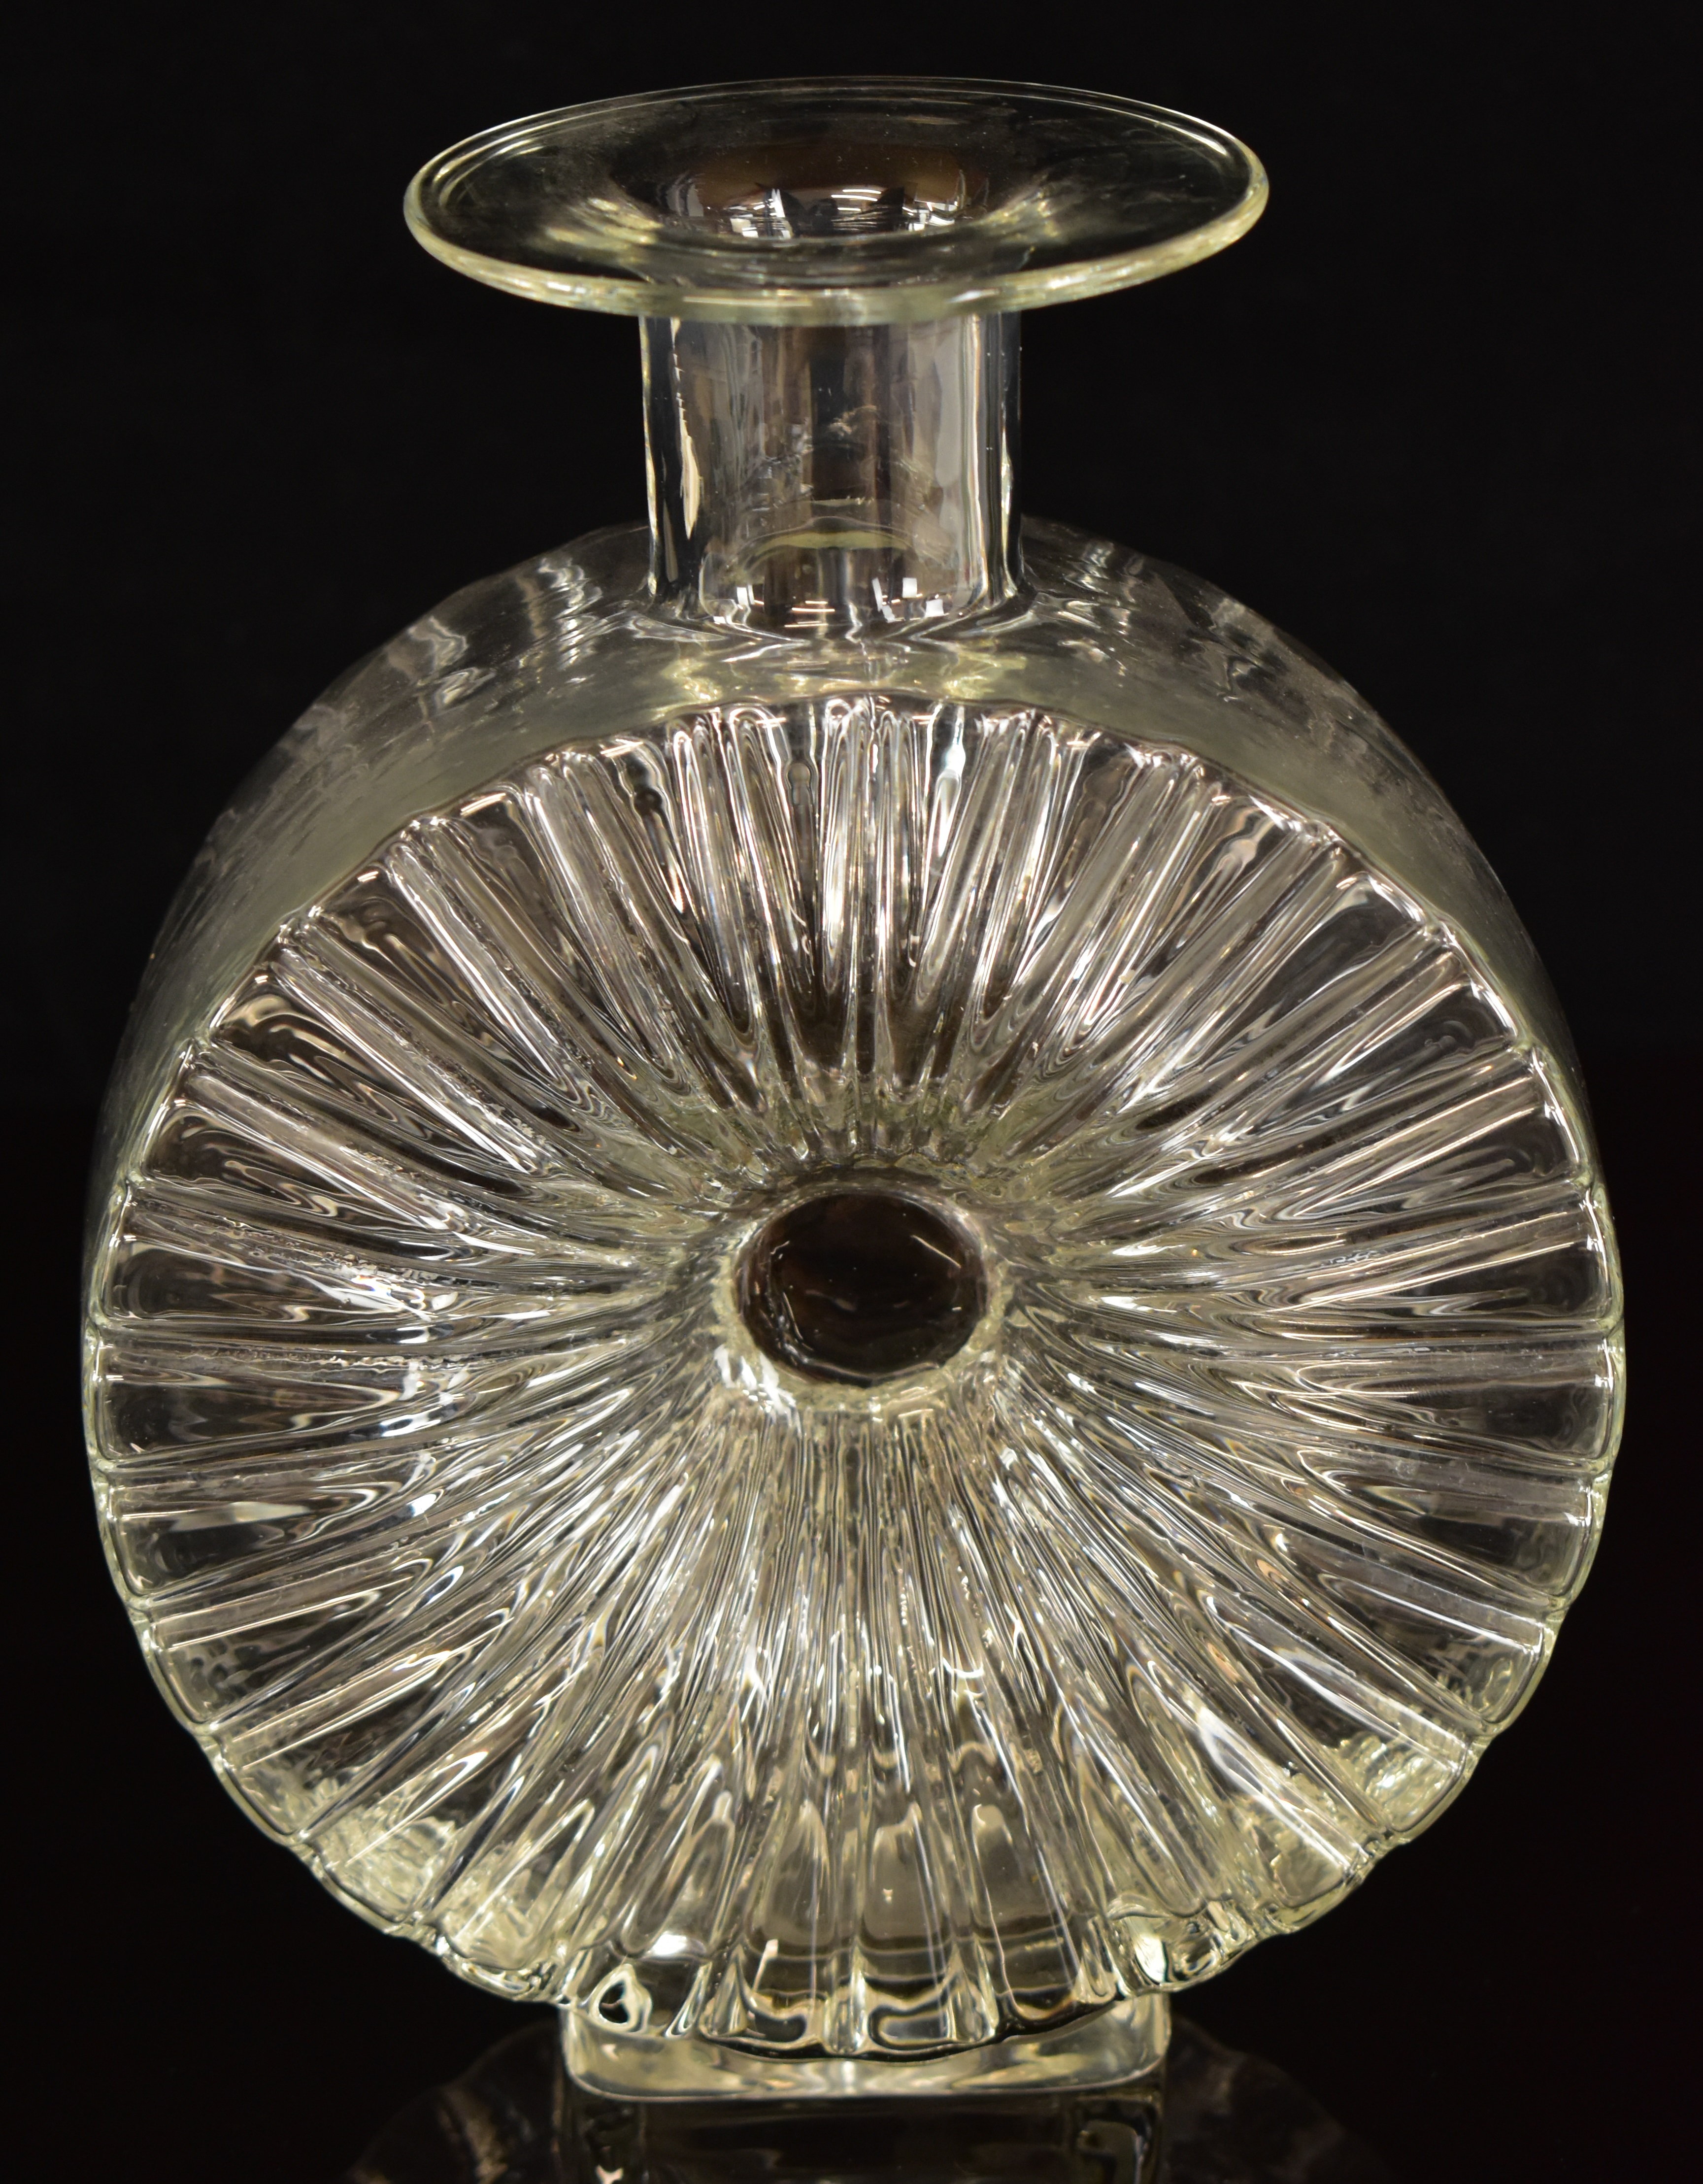 Helena Tynell for Riihimaen Lasi Riihimaki Aurinkopullo Sun Bottle clear glass vase, 23cm tall. - Image 3 of 4